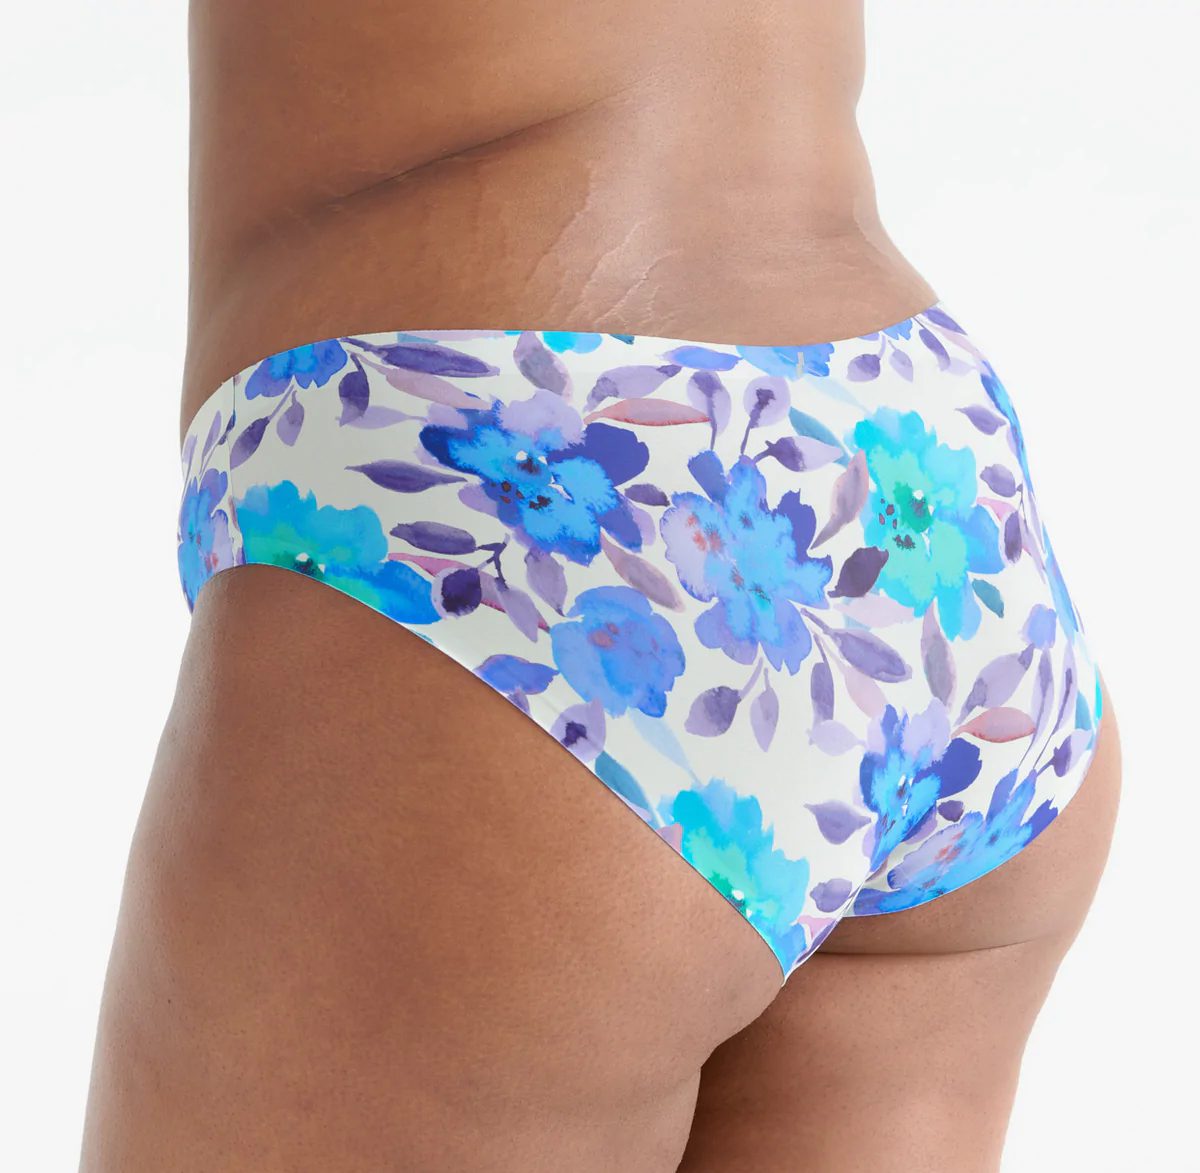 Knix Super Leakproof Bikini - Period and Incontinence Underwear